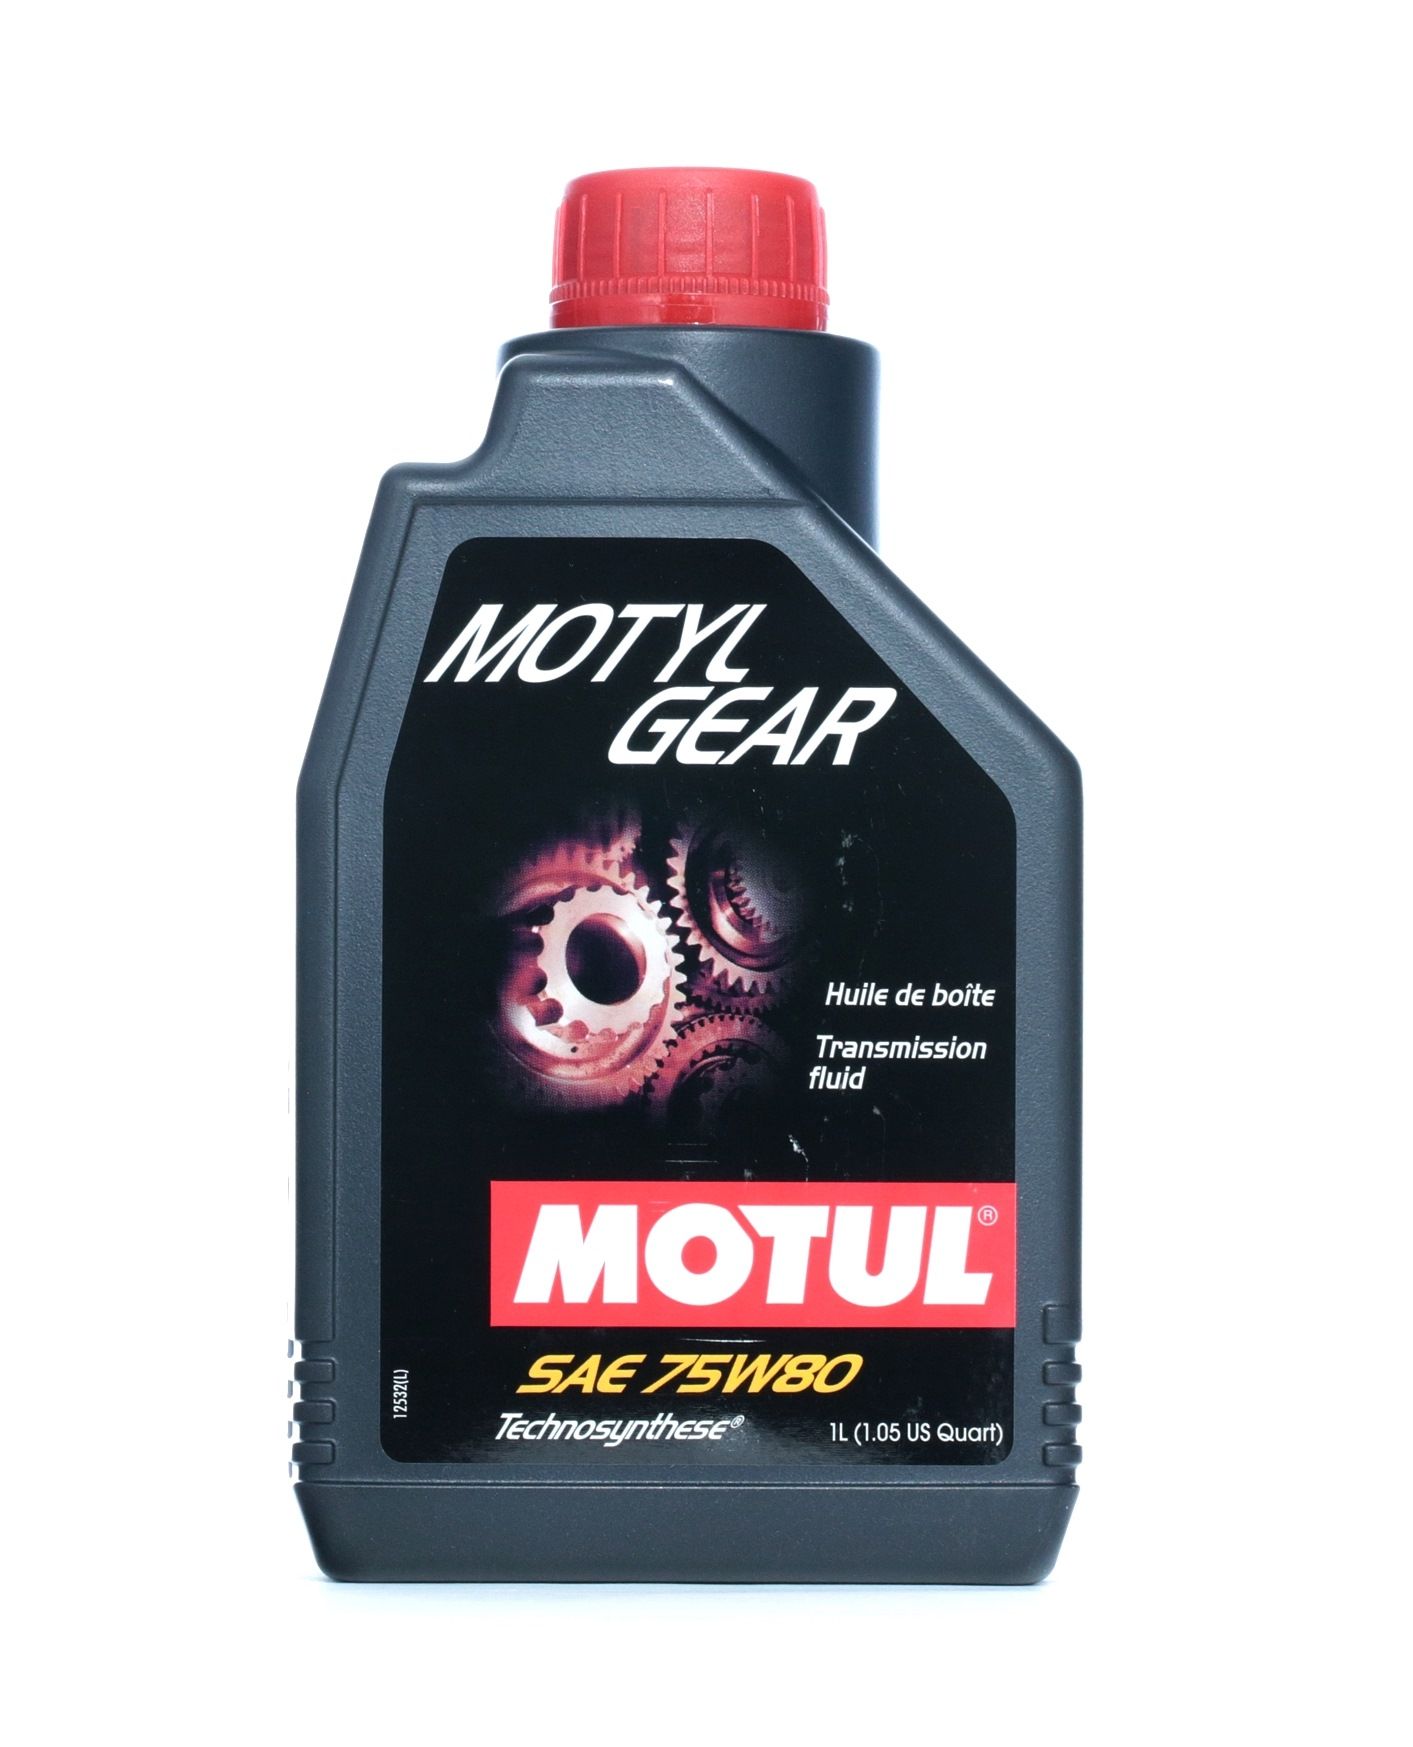 MOTUL MOTYLGEAR 105782 Transmission fluid 75W-80, Part Synthetic Oil, Capacity: 1l